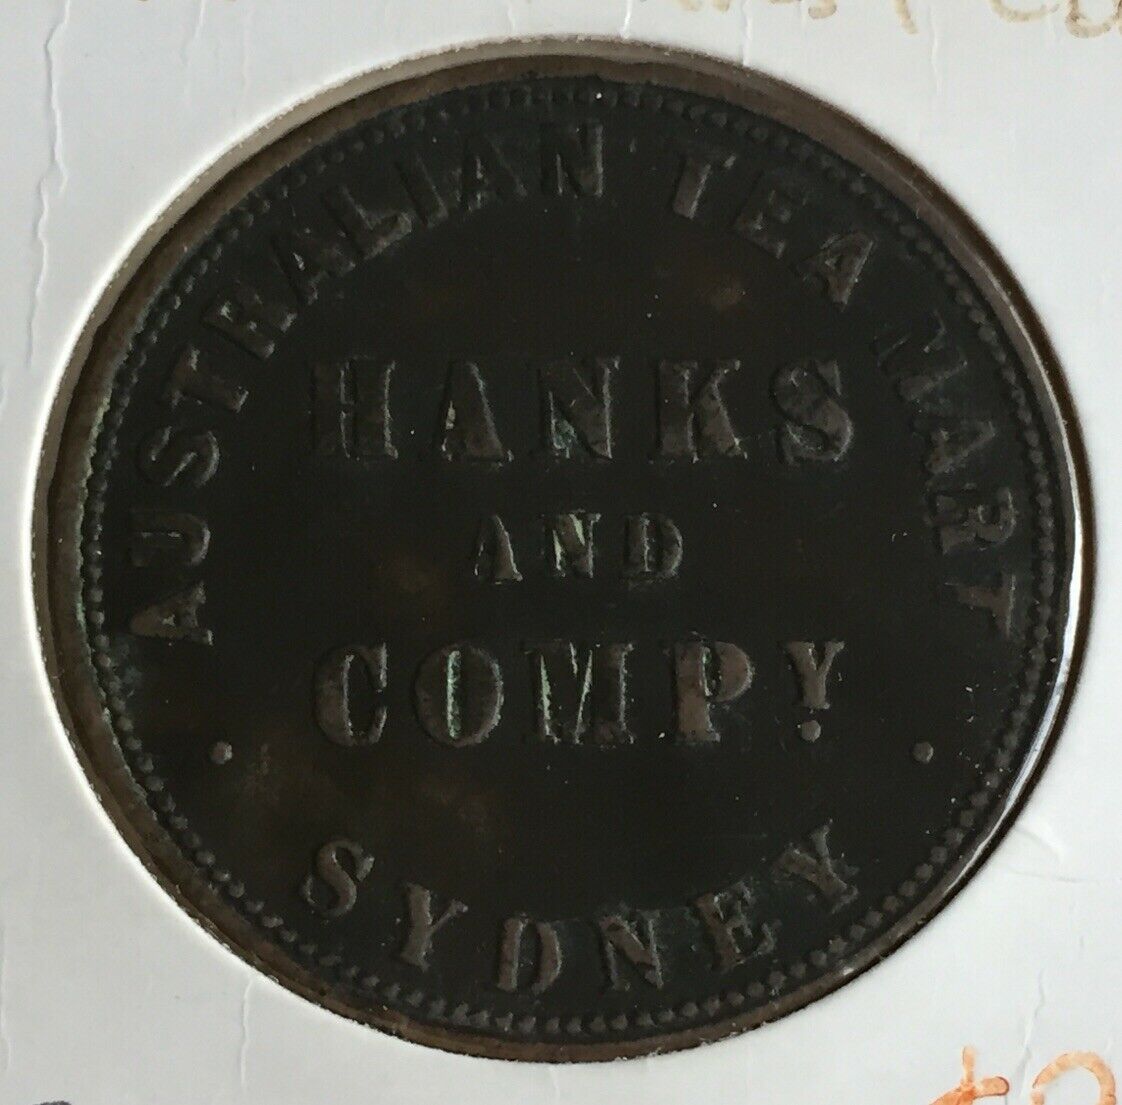 Australia Hanks & Company 1d Penny Token R177 Very Fine Condition